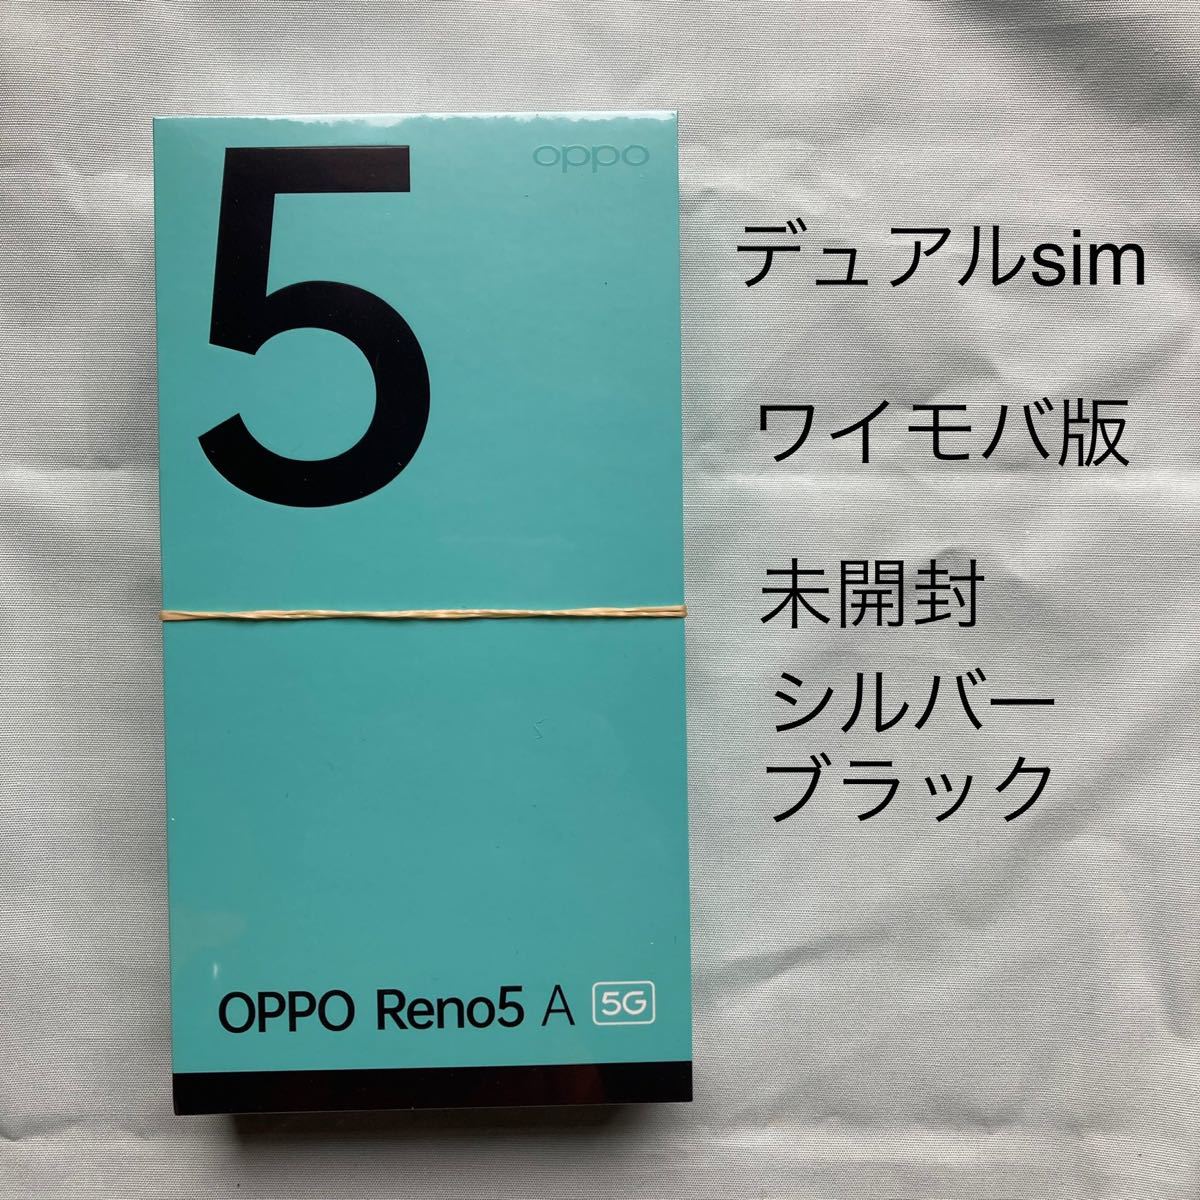 Daininki Shouhin 新品未開封 OPPO Reno5A シルバーブラック 新品入荷 